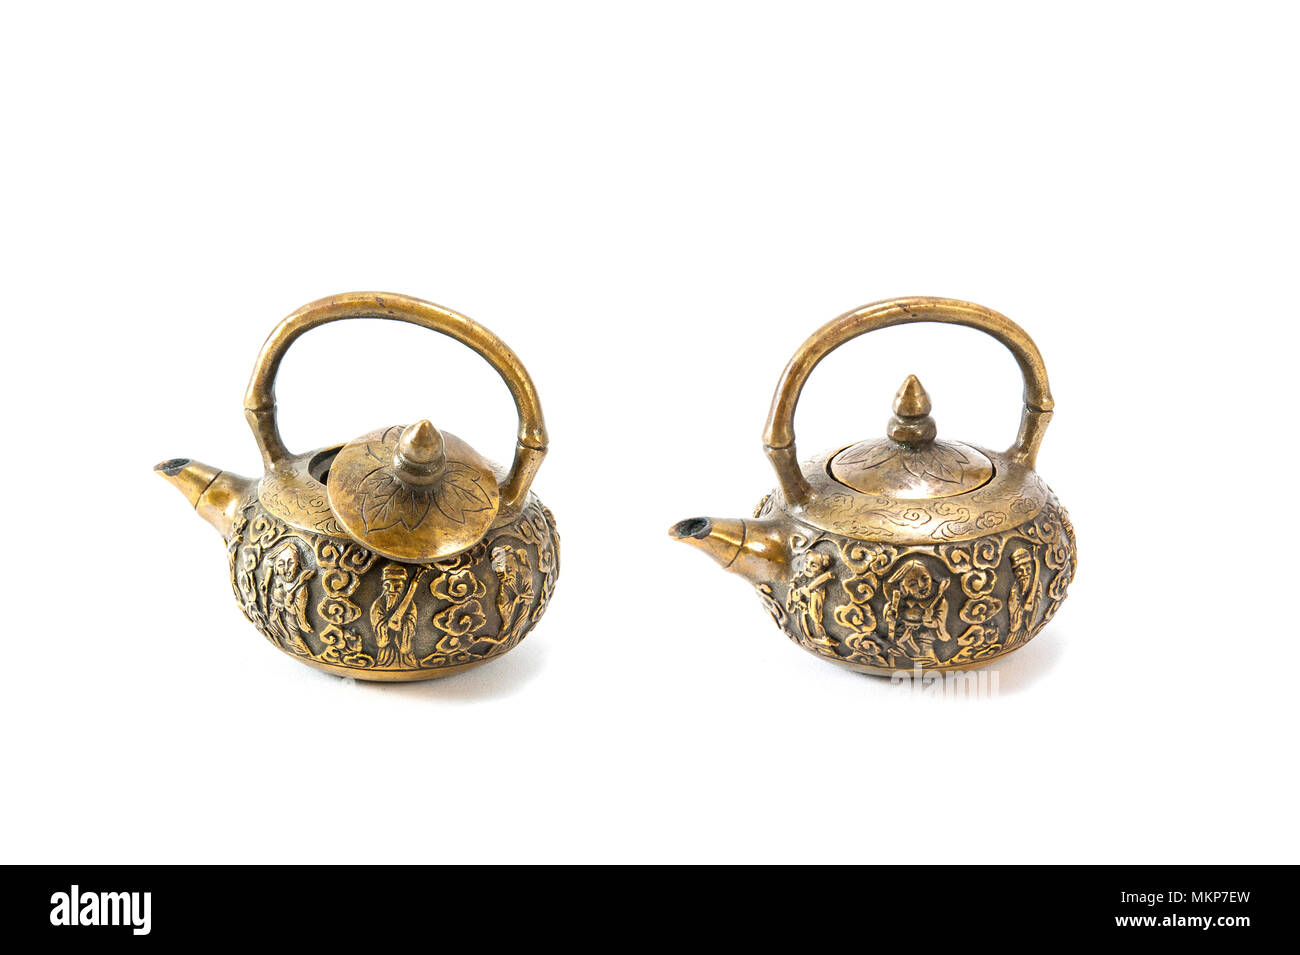 https://c8.alamy.com/comp/MKP7EW/miniature-antique-brass-teapot-isolated-on-white-background-MKP7EW.jpg